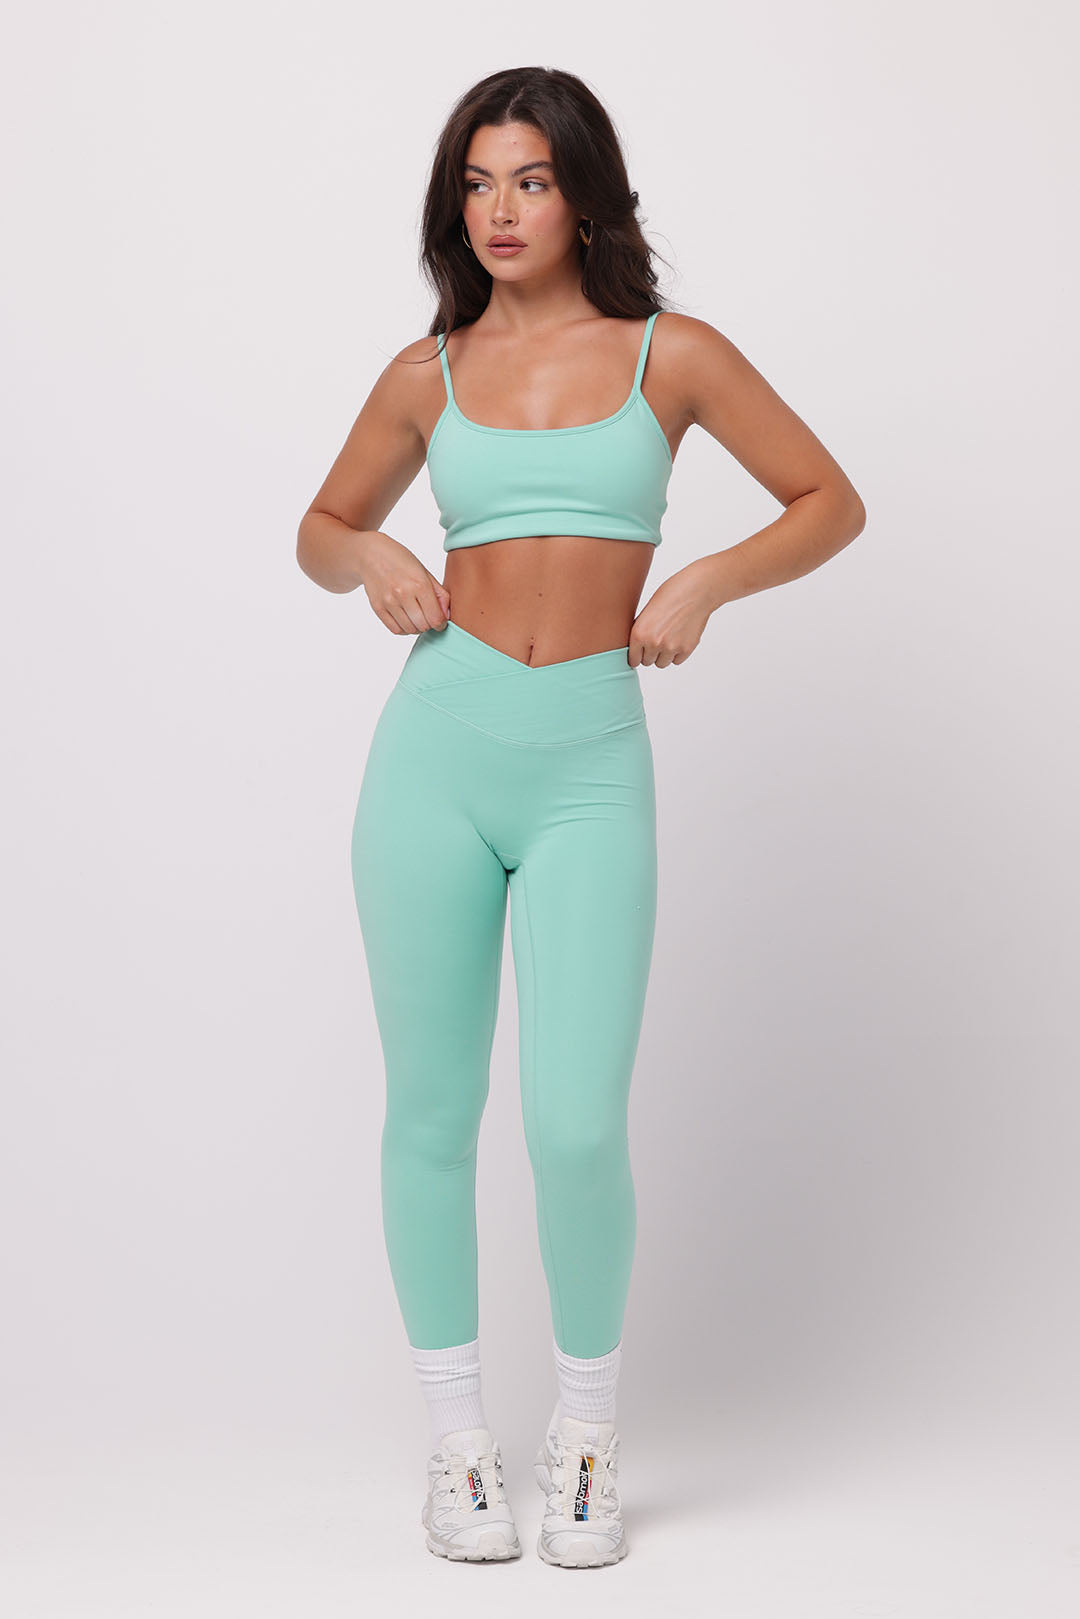 Aurora X Sports Bra - Mint Green  Sports bra, Workout clothes, Bra